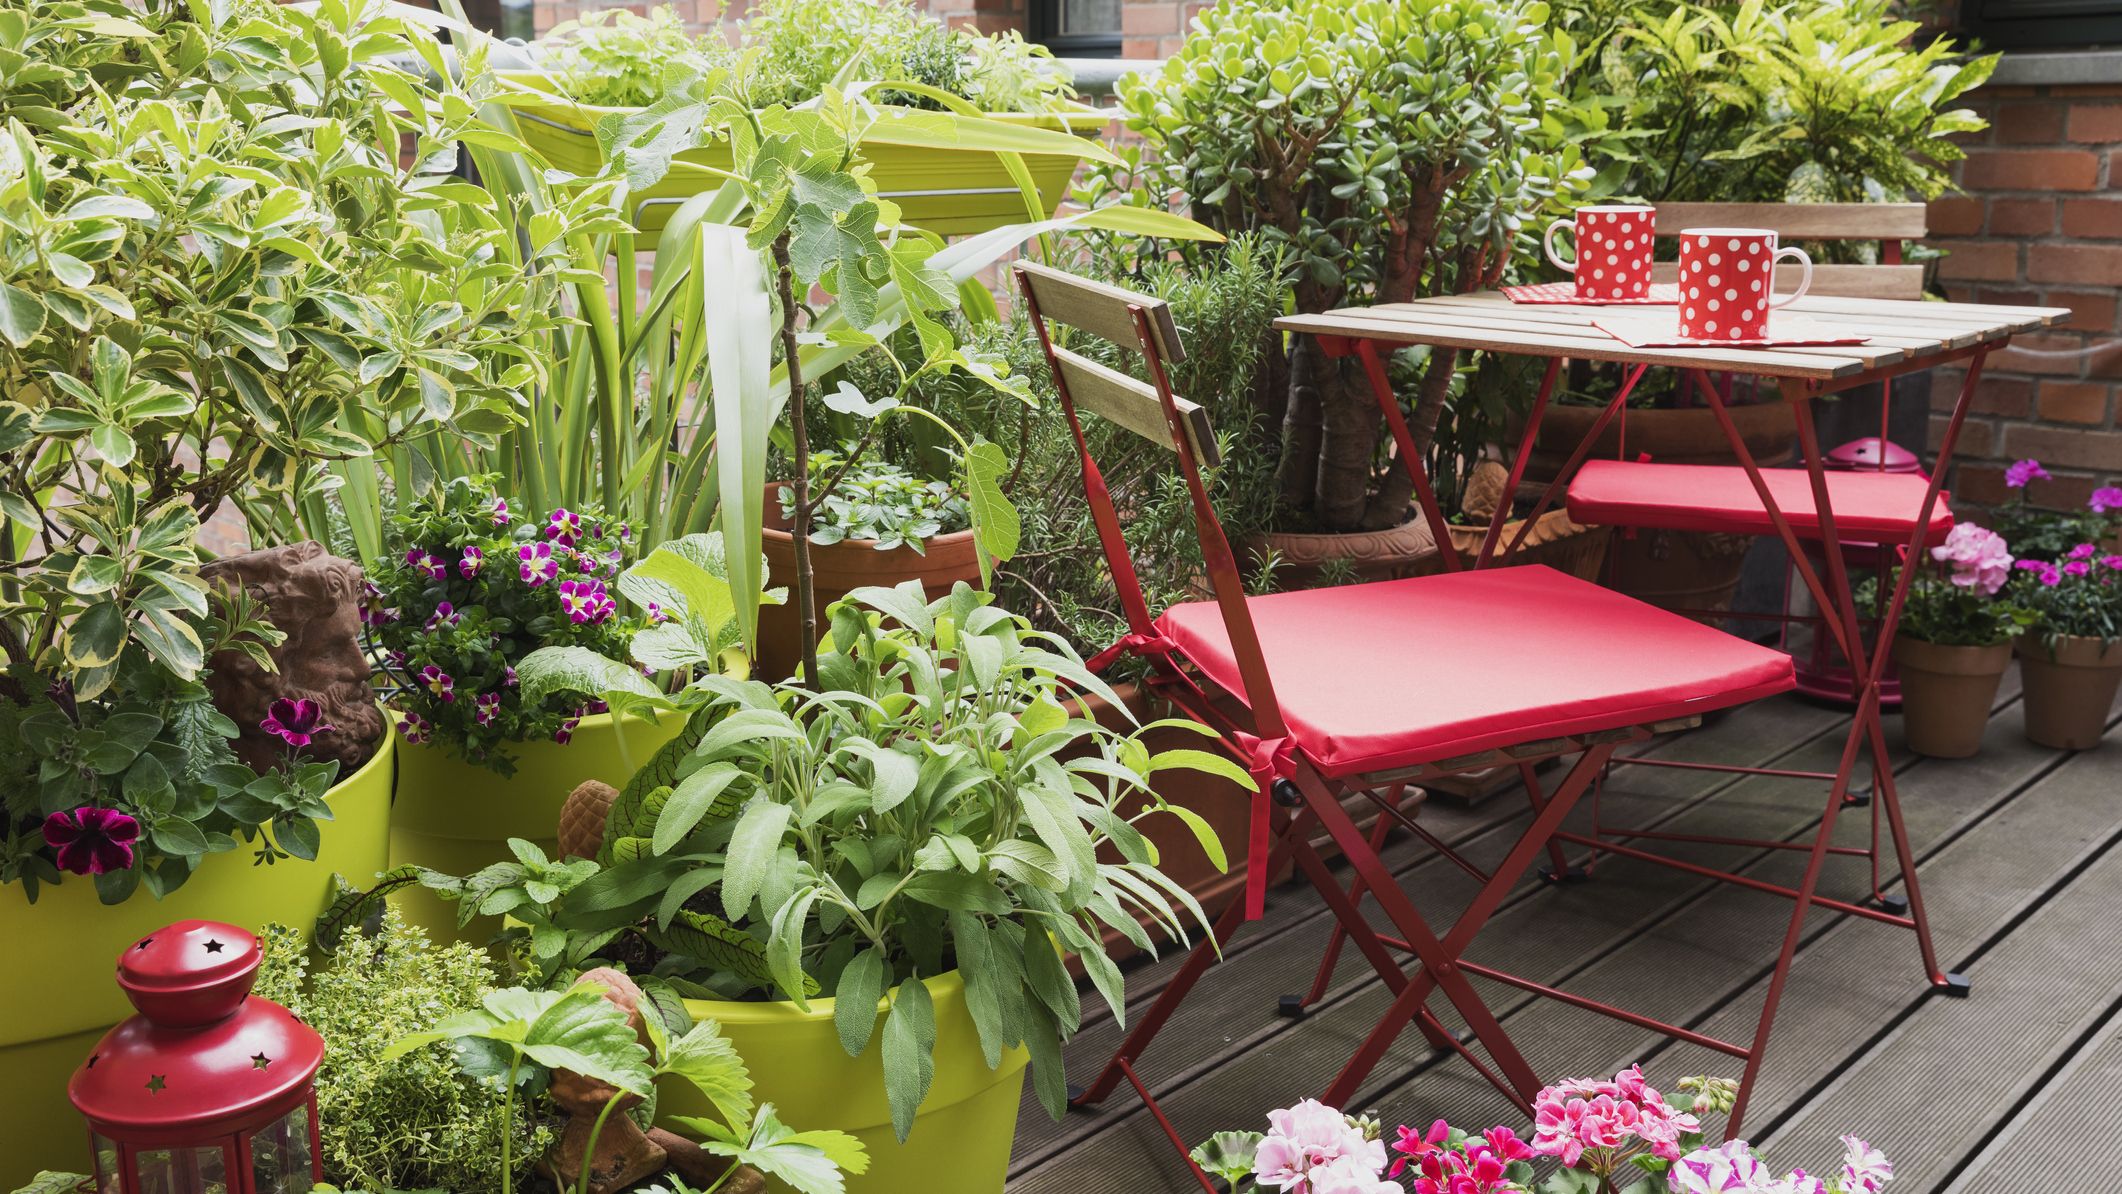 Gardening Tips During The Rainy Days – The Urban Gardening Shop